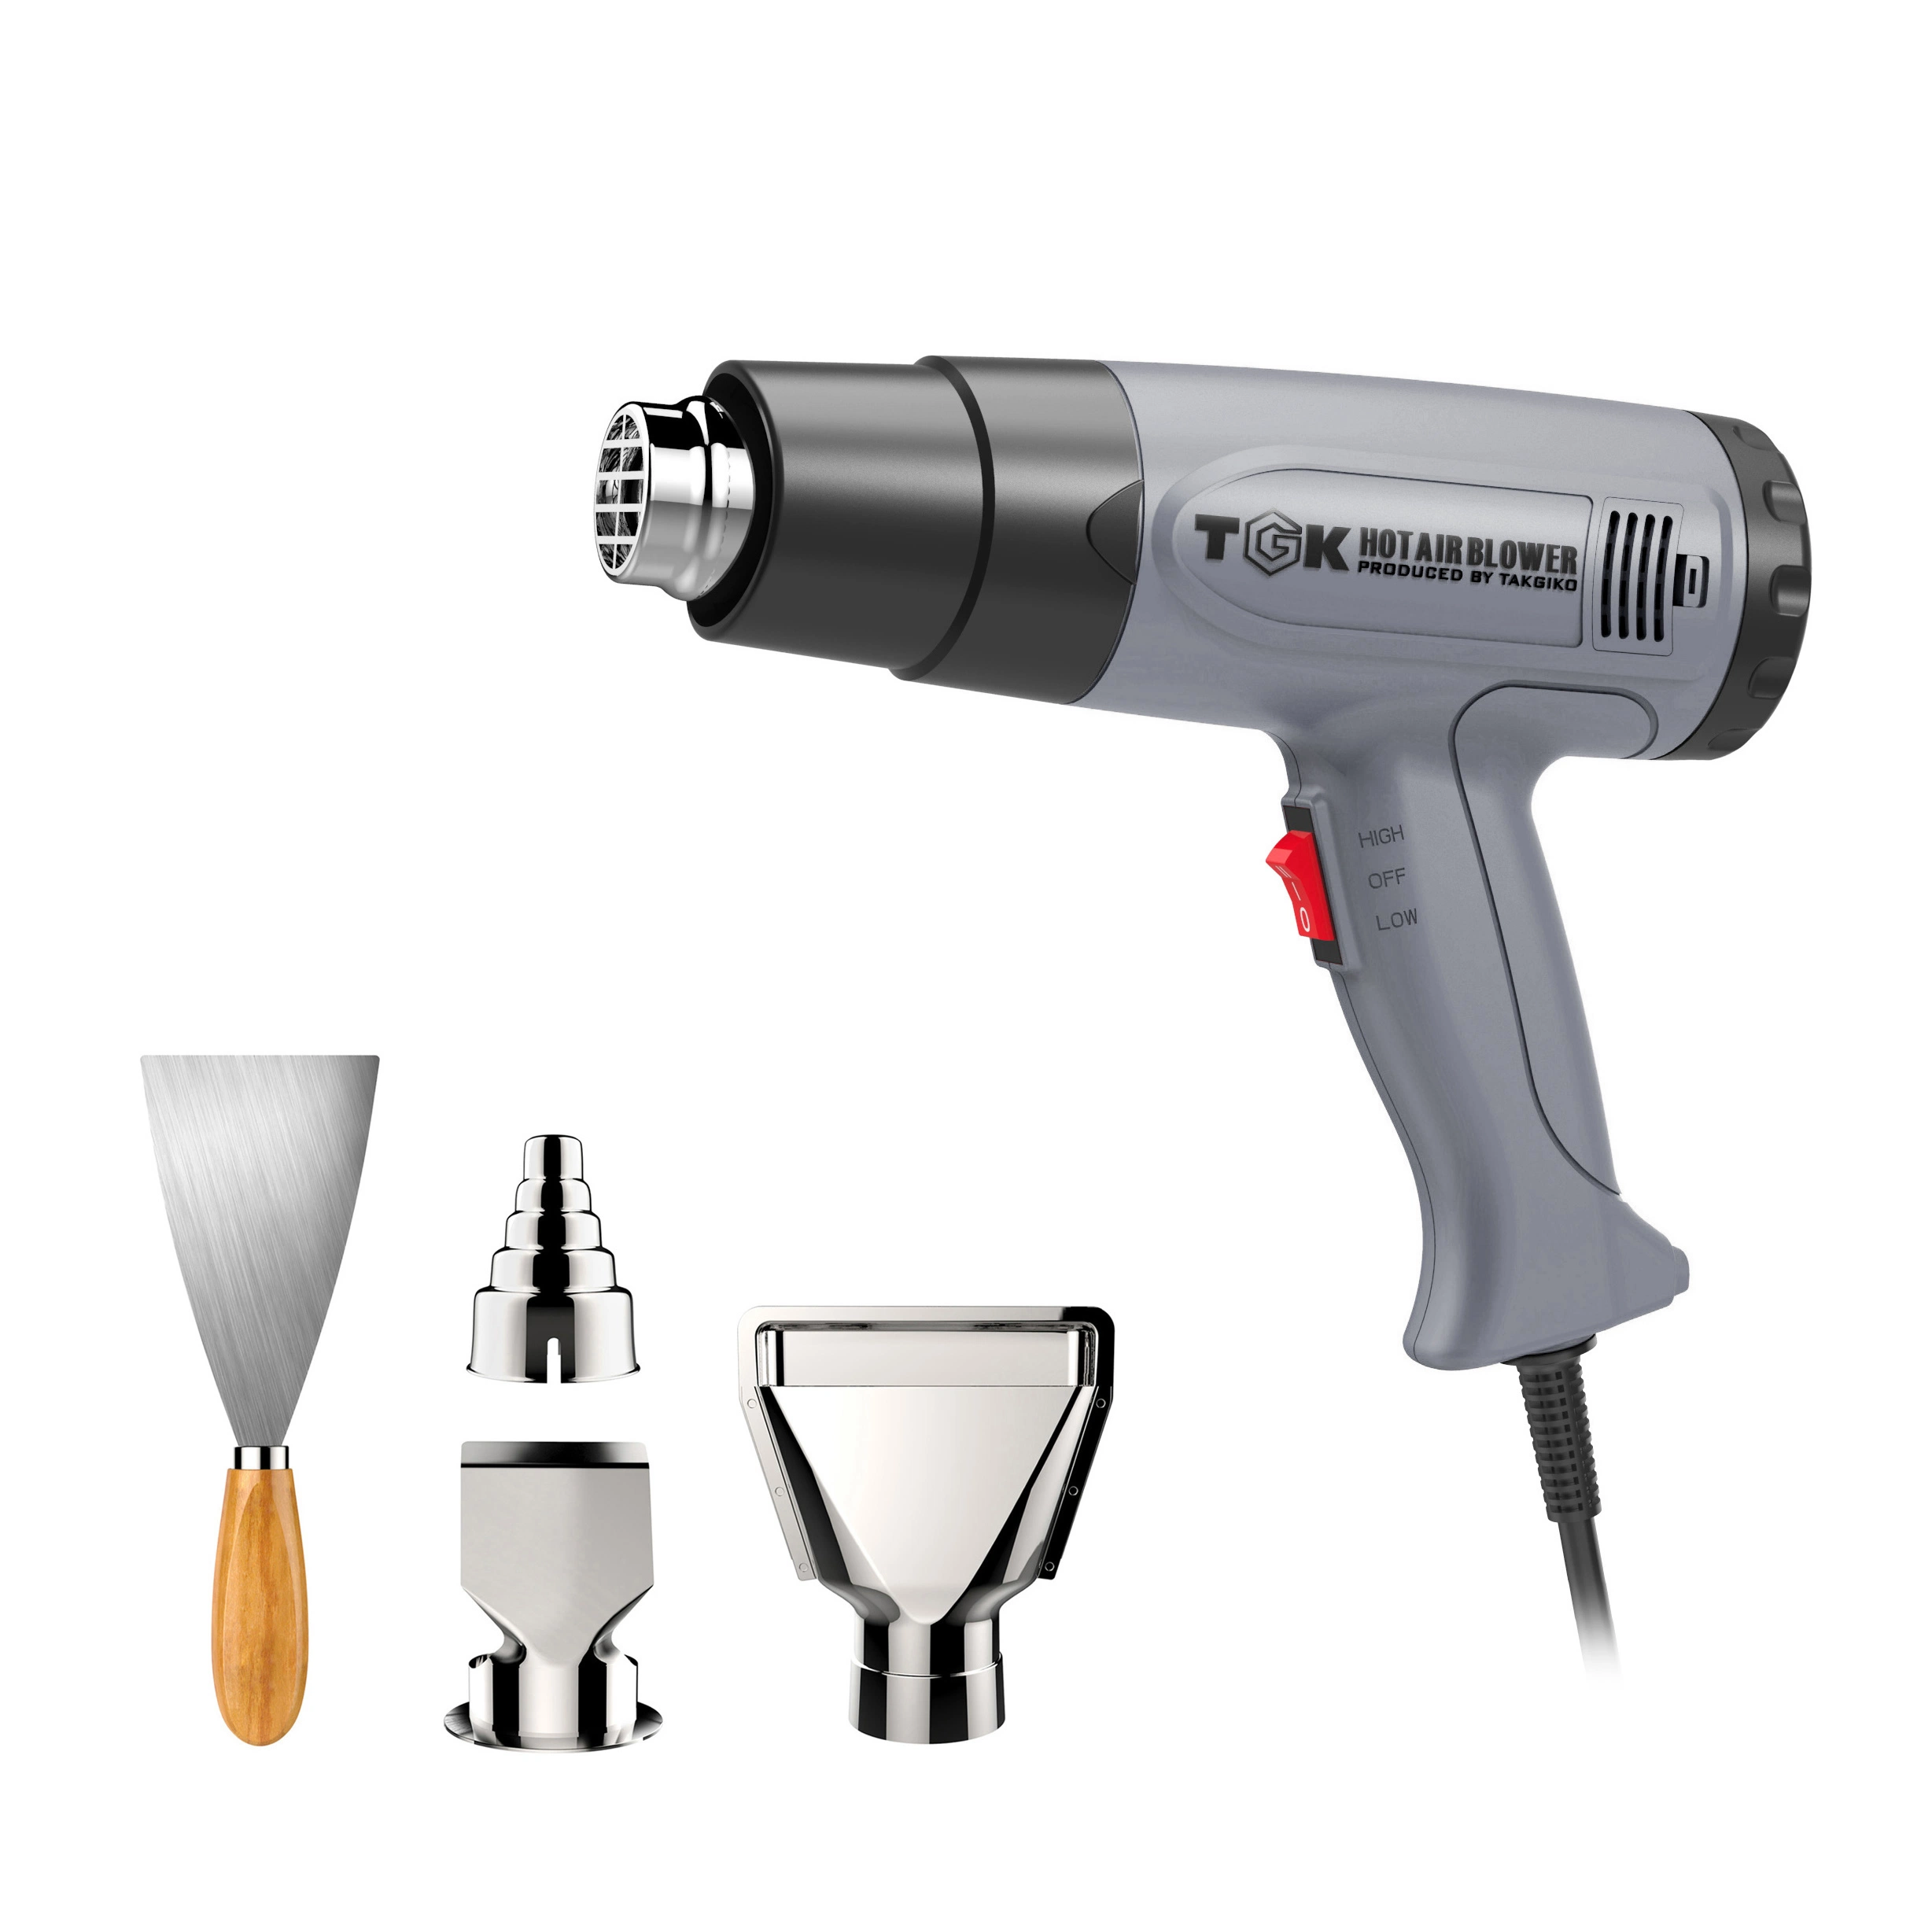 Paint Heat Gun for Tinting Windows or Automotive Plastic Repair Hg6618